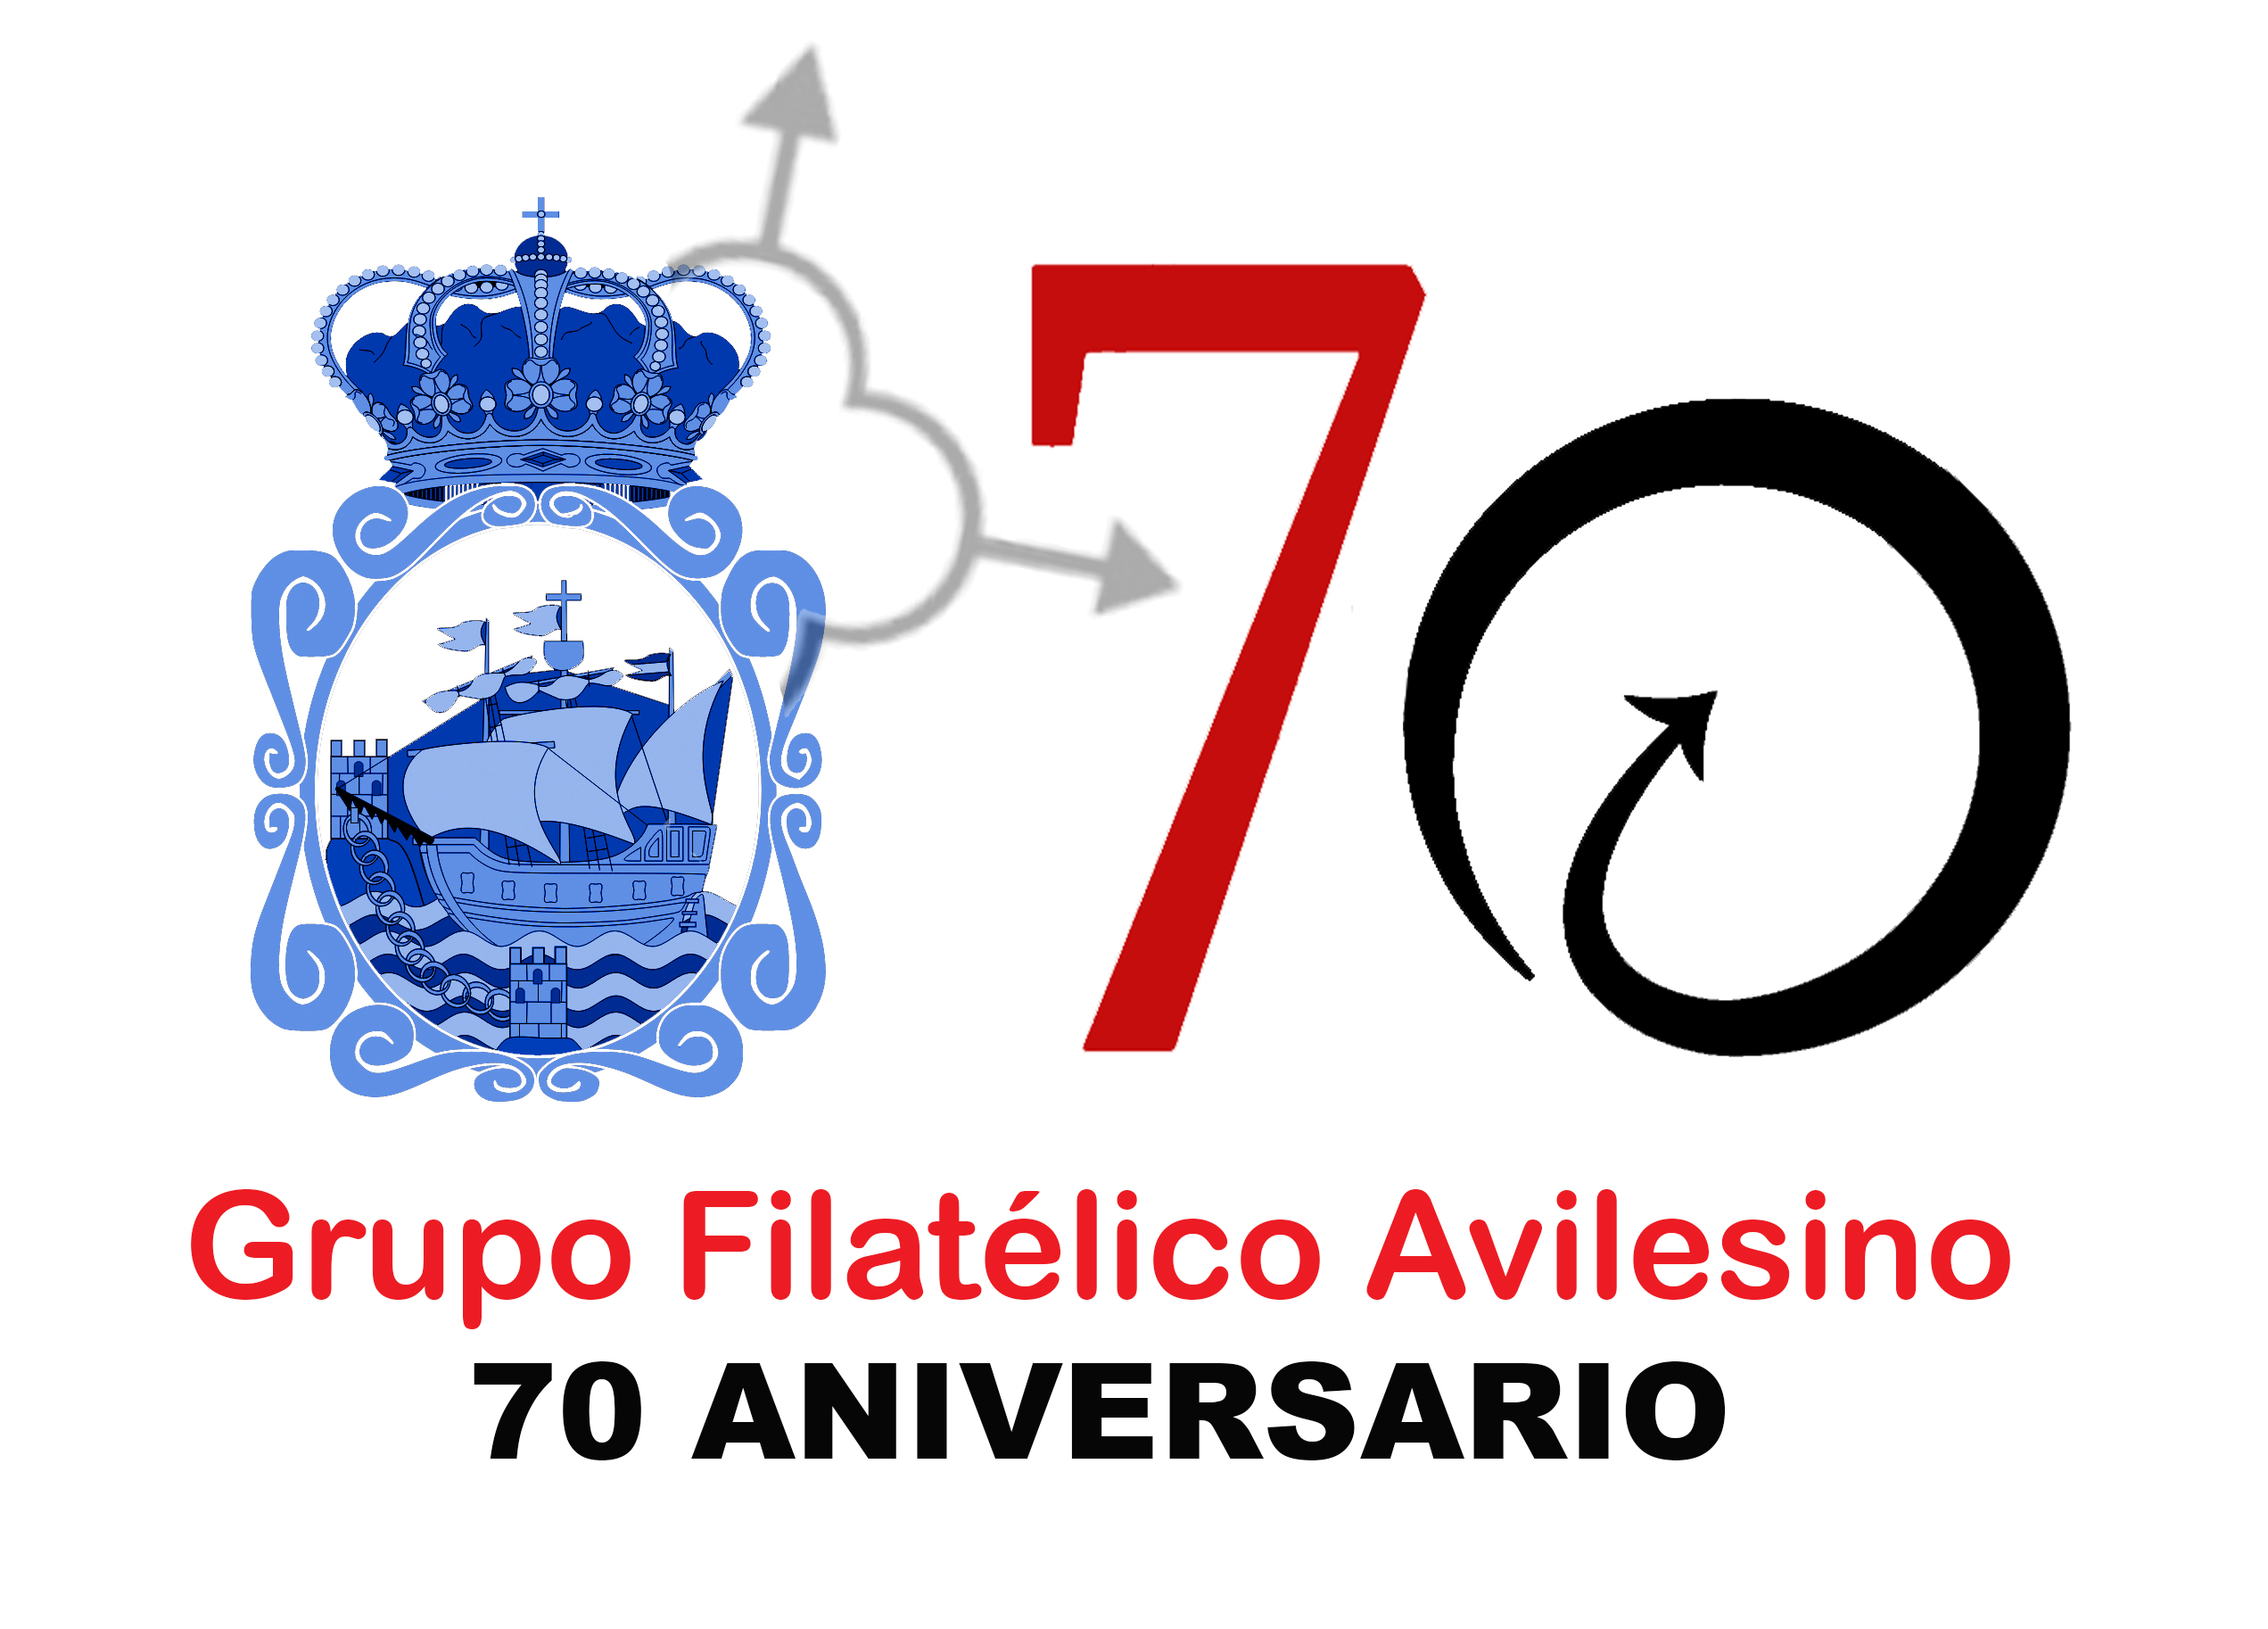 Logotipo conmemorativo del 70 aniversario del Grupo Filatélico Avilesino